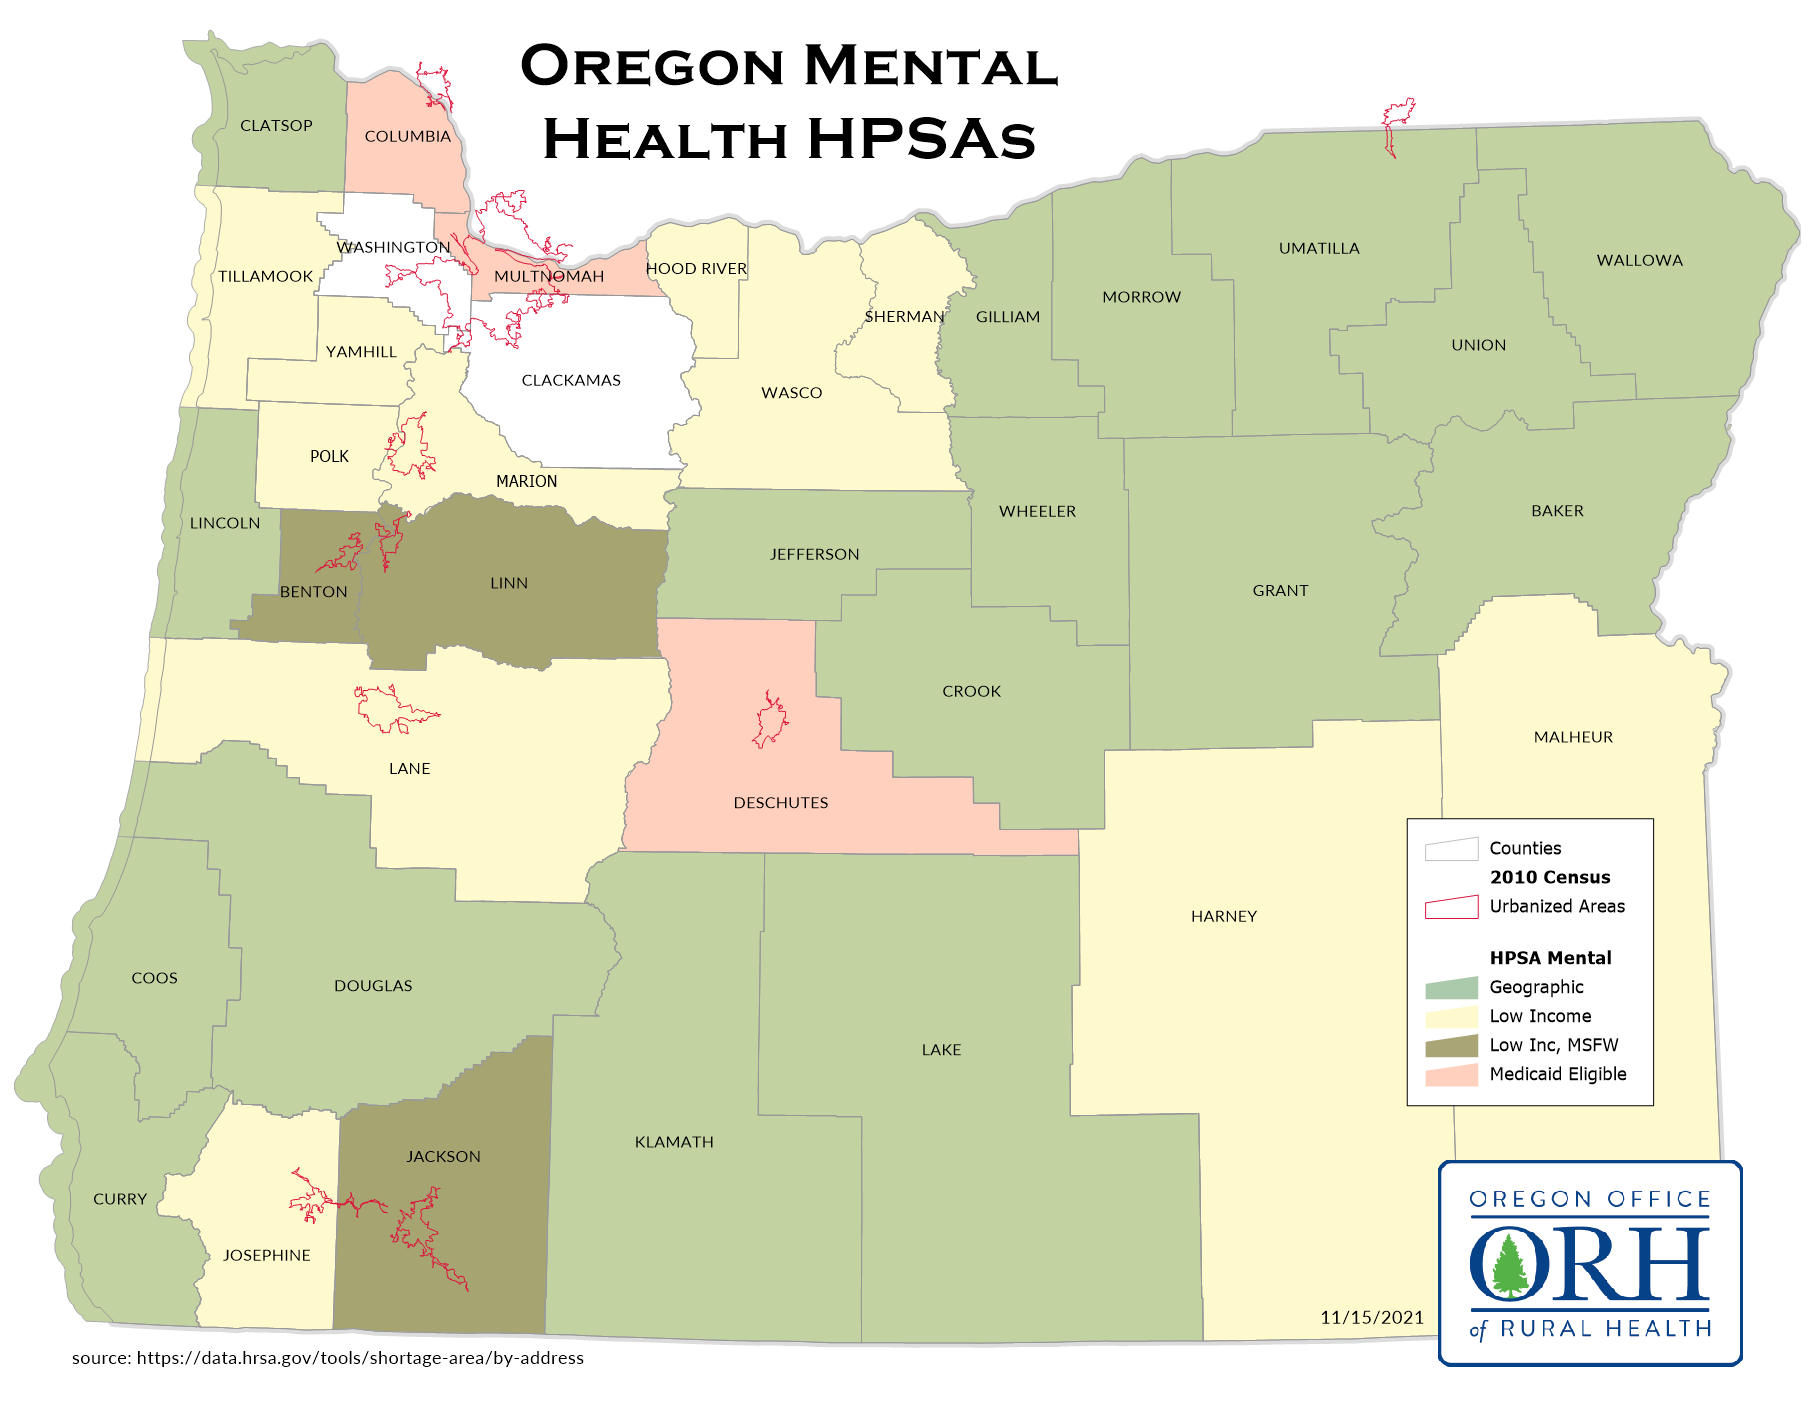 HPSA Mental Health Map